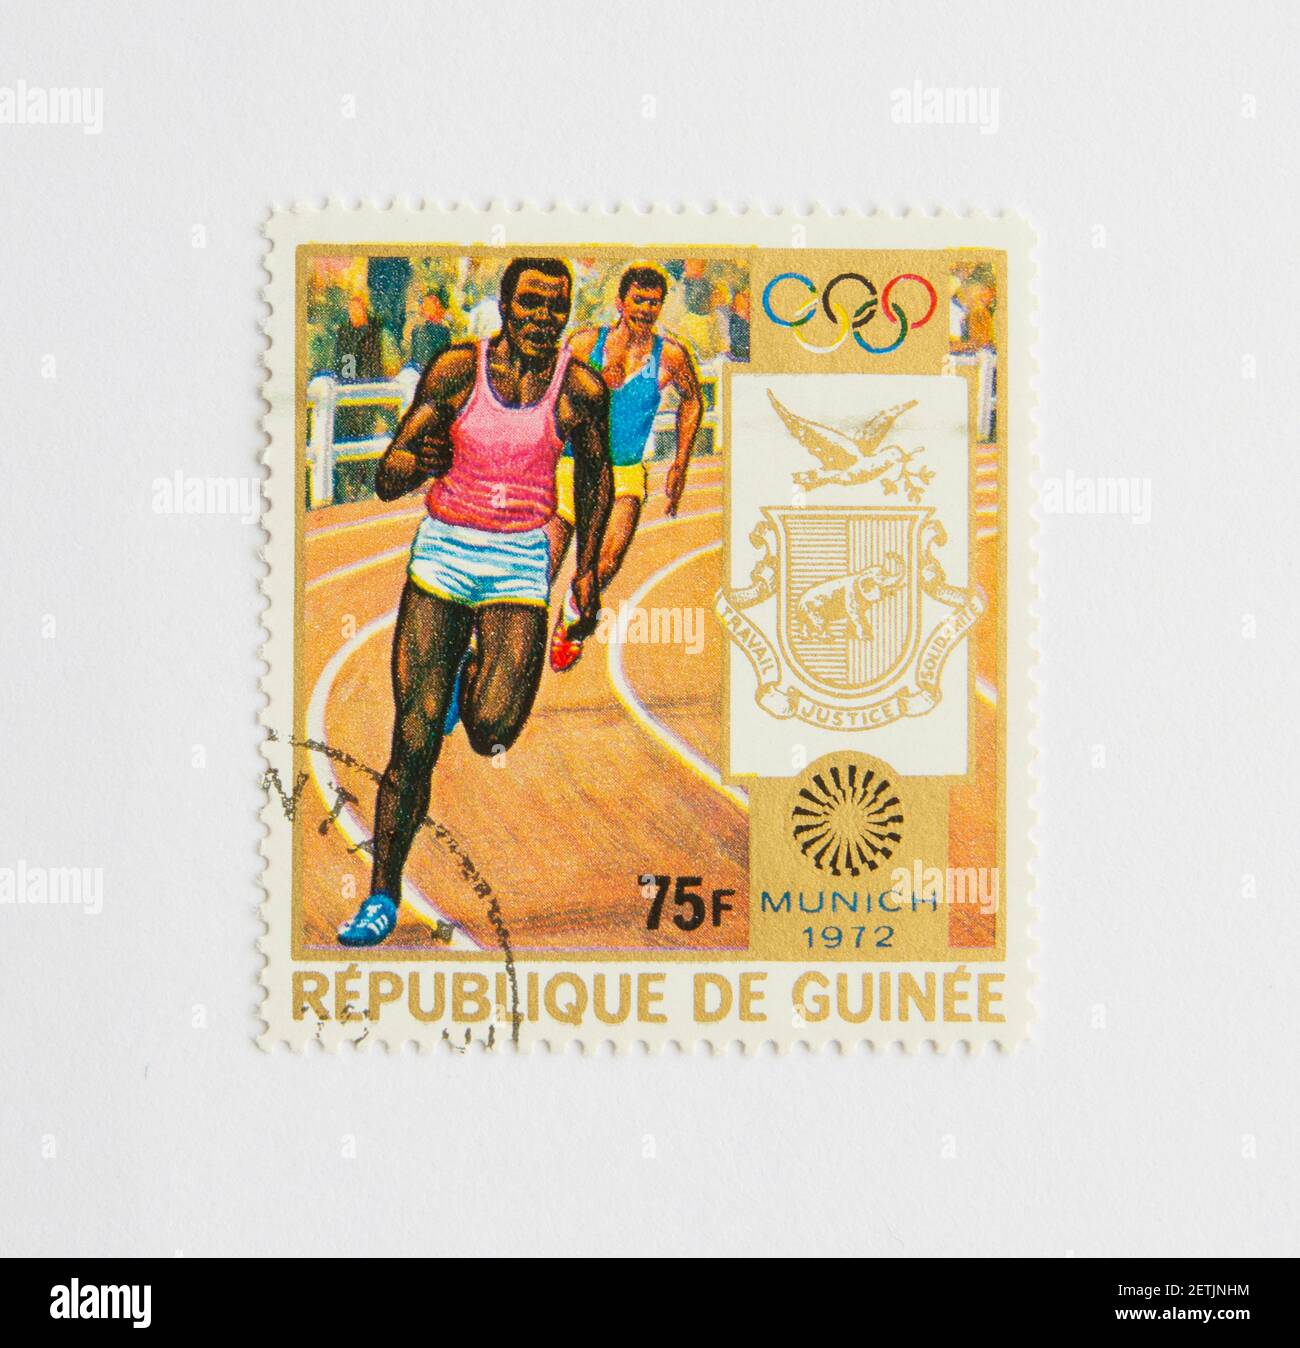 01.03.2021 Istanbul Turkey. Guinea Republic Postage Stamp. circa 1972. munich olympic games. Marathon Stock Photo